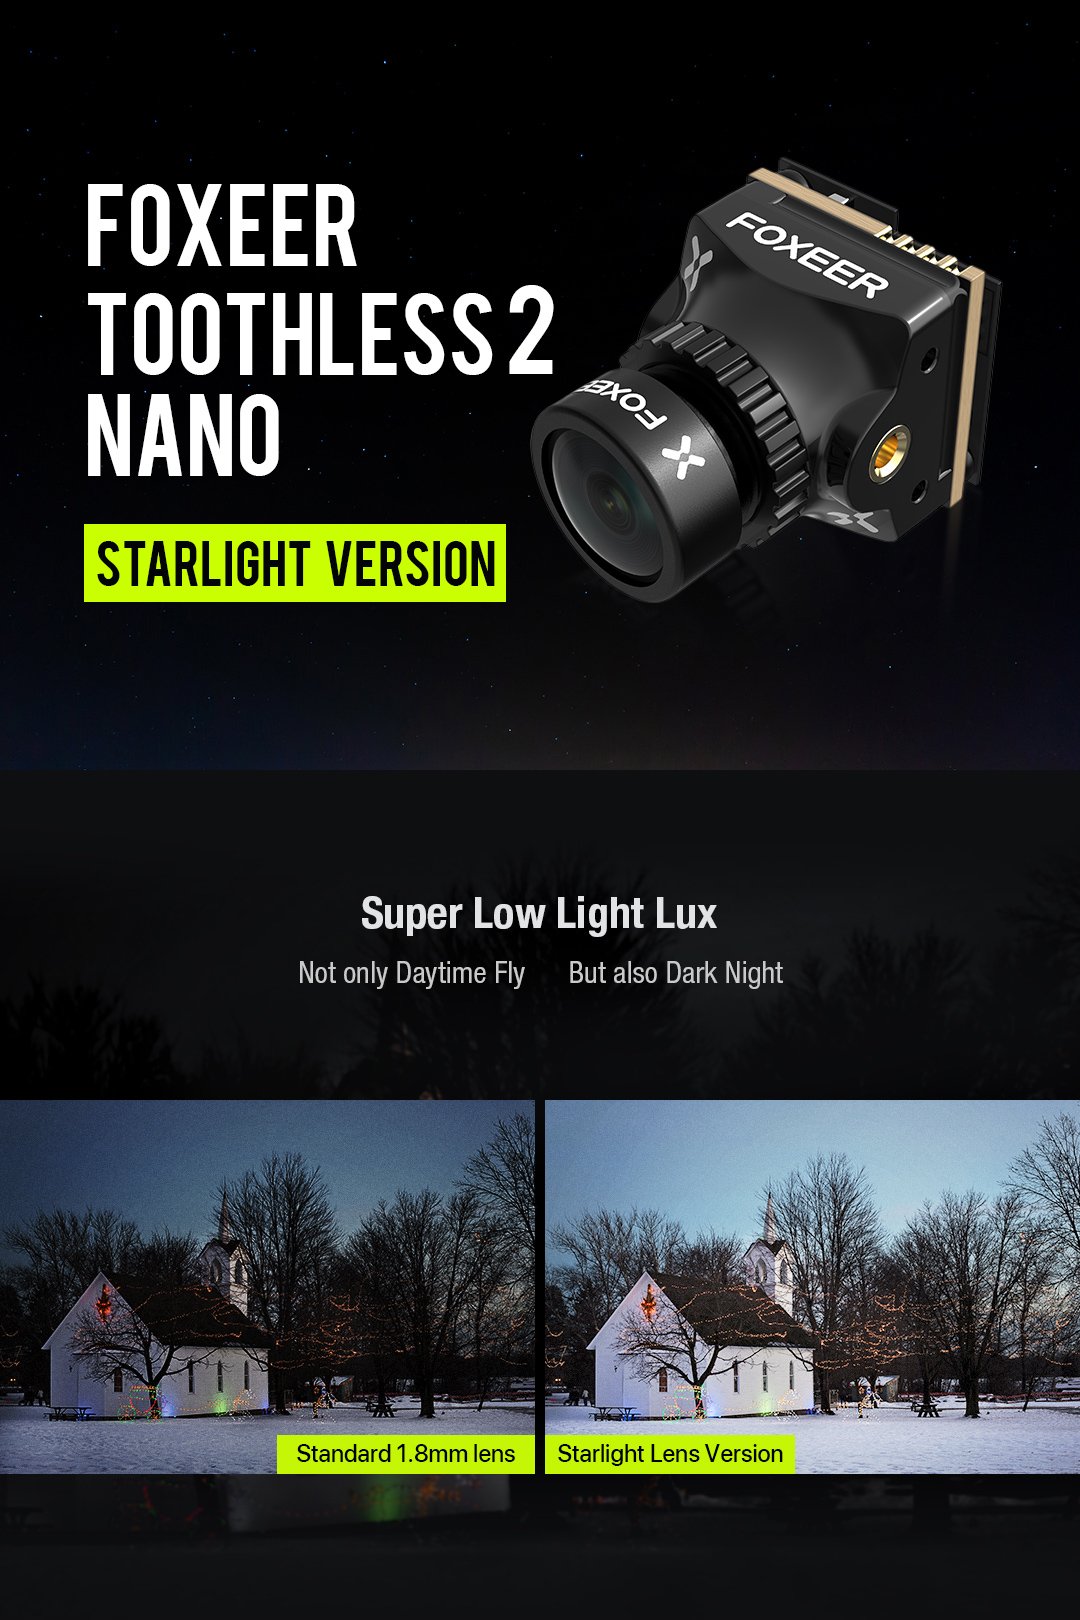 Foxeer Toothless 2 Nano Starlight 1200TVL 16:9/4:3 PAL/NSTC CMOS FPV Camera w/ 1/2" Sensor (2.1mm) - Pick Your Color 11 - Foxeer